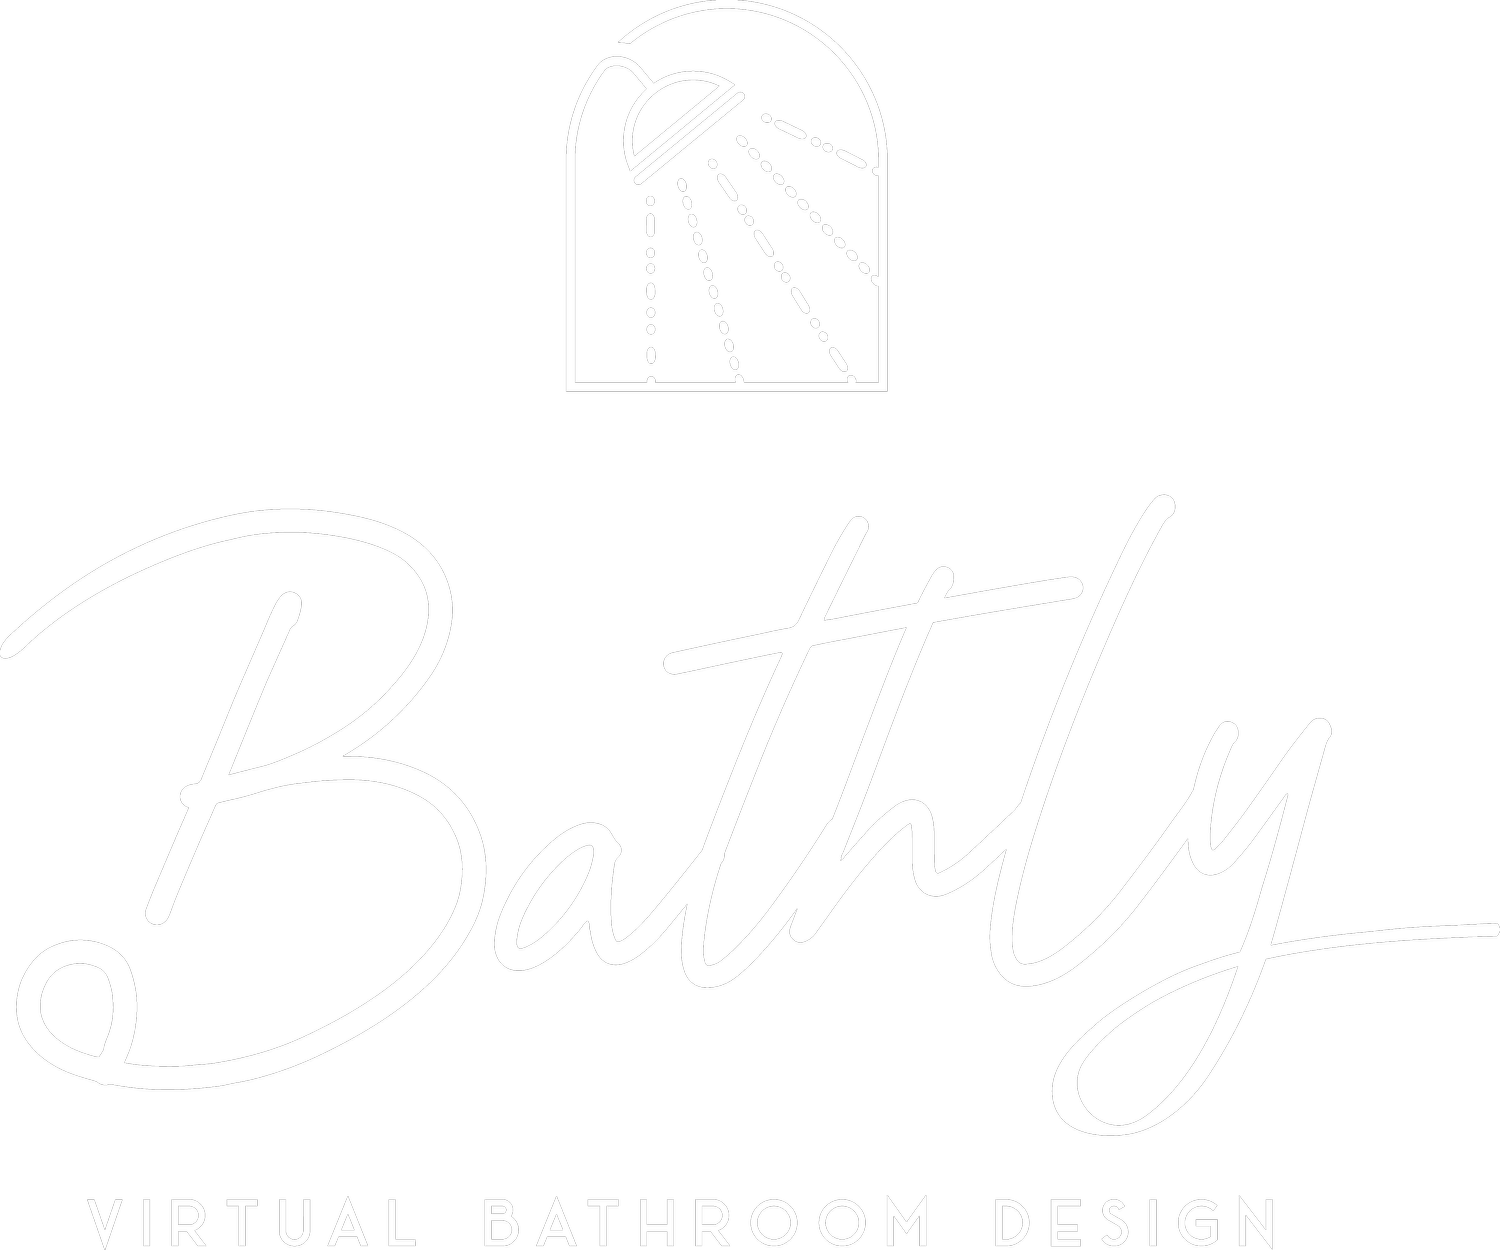 Bathly